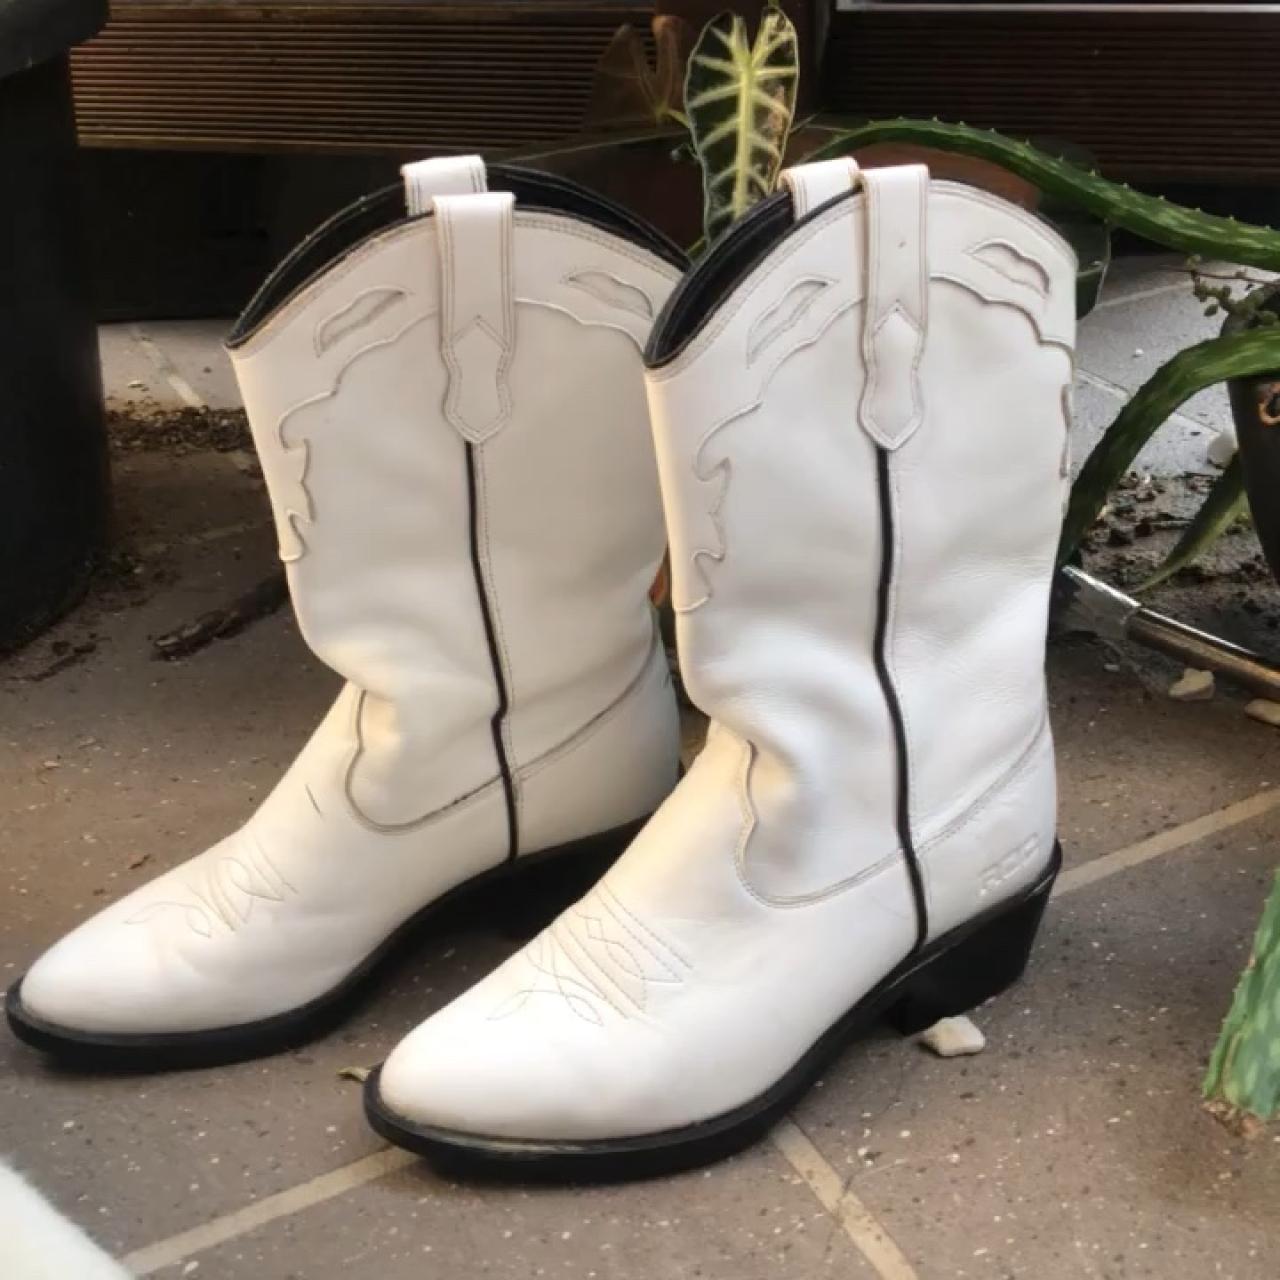 roc boots indio white